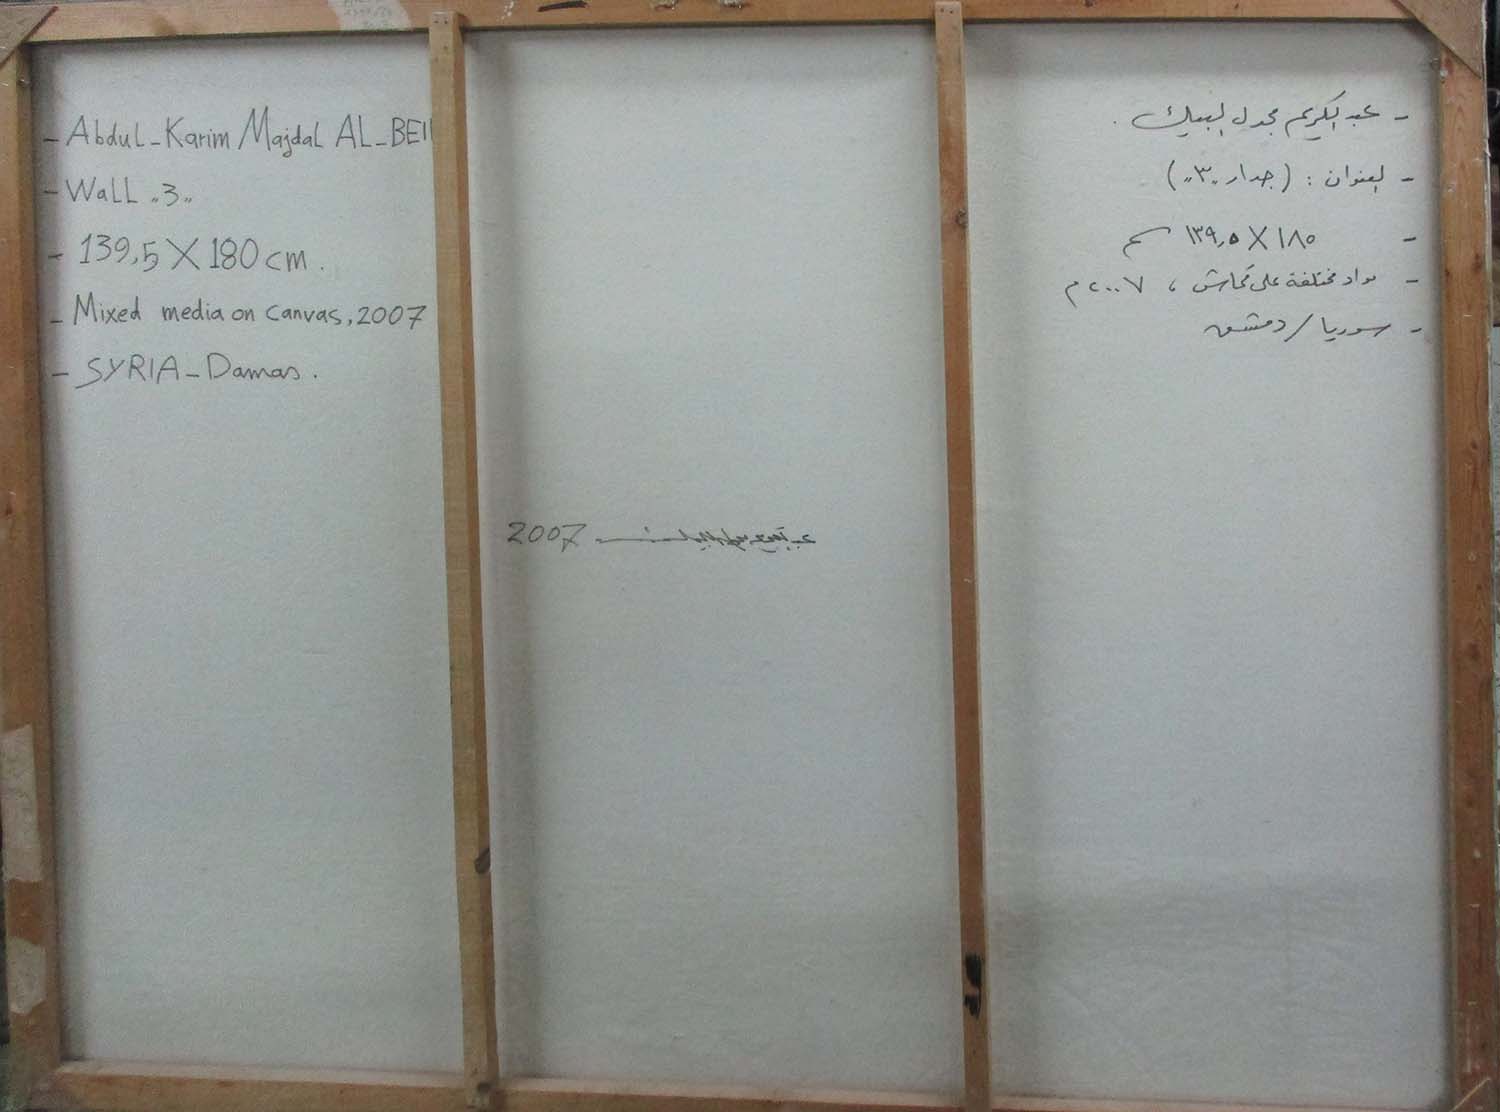 ABDUL KARIM MAJDAL AL BEIK 'Wall 3', mixed media on canvas, 2007, 139.5cm x 180cm. - Image 2 of 2